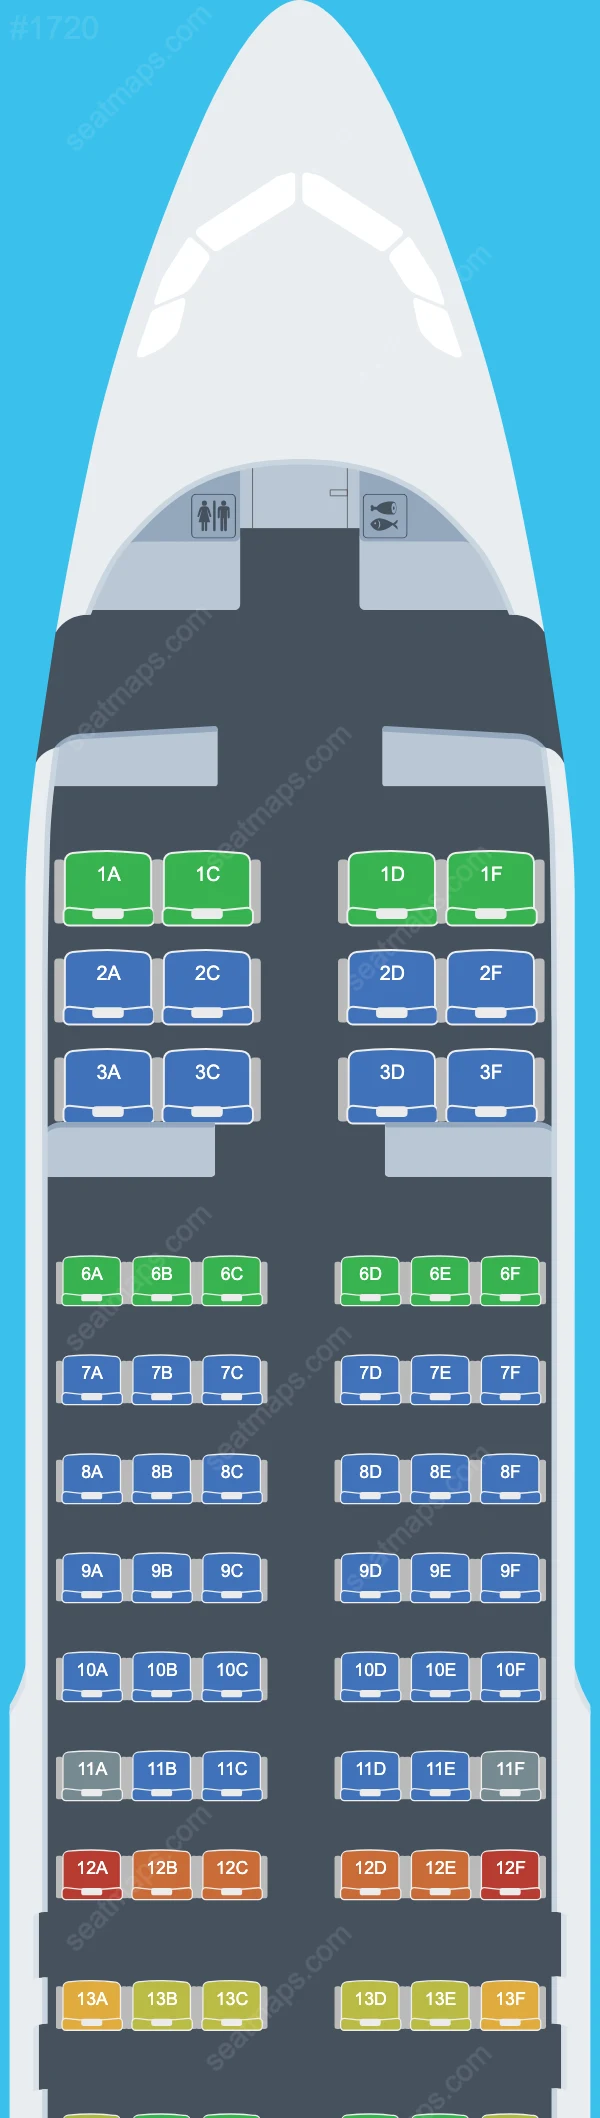 Aeroflot Airbus A320 Seat Maps A320-200neo